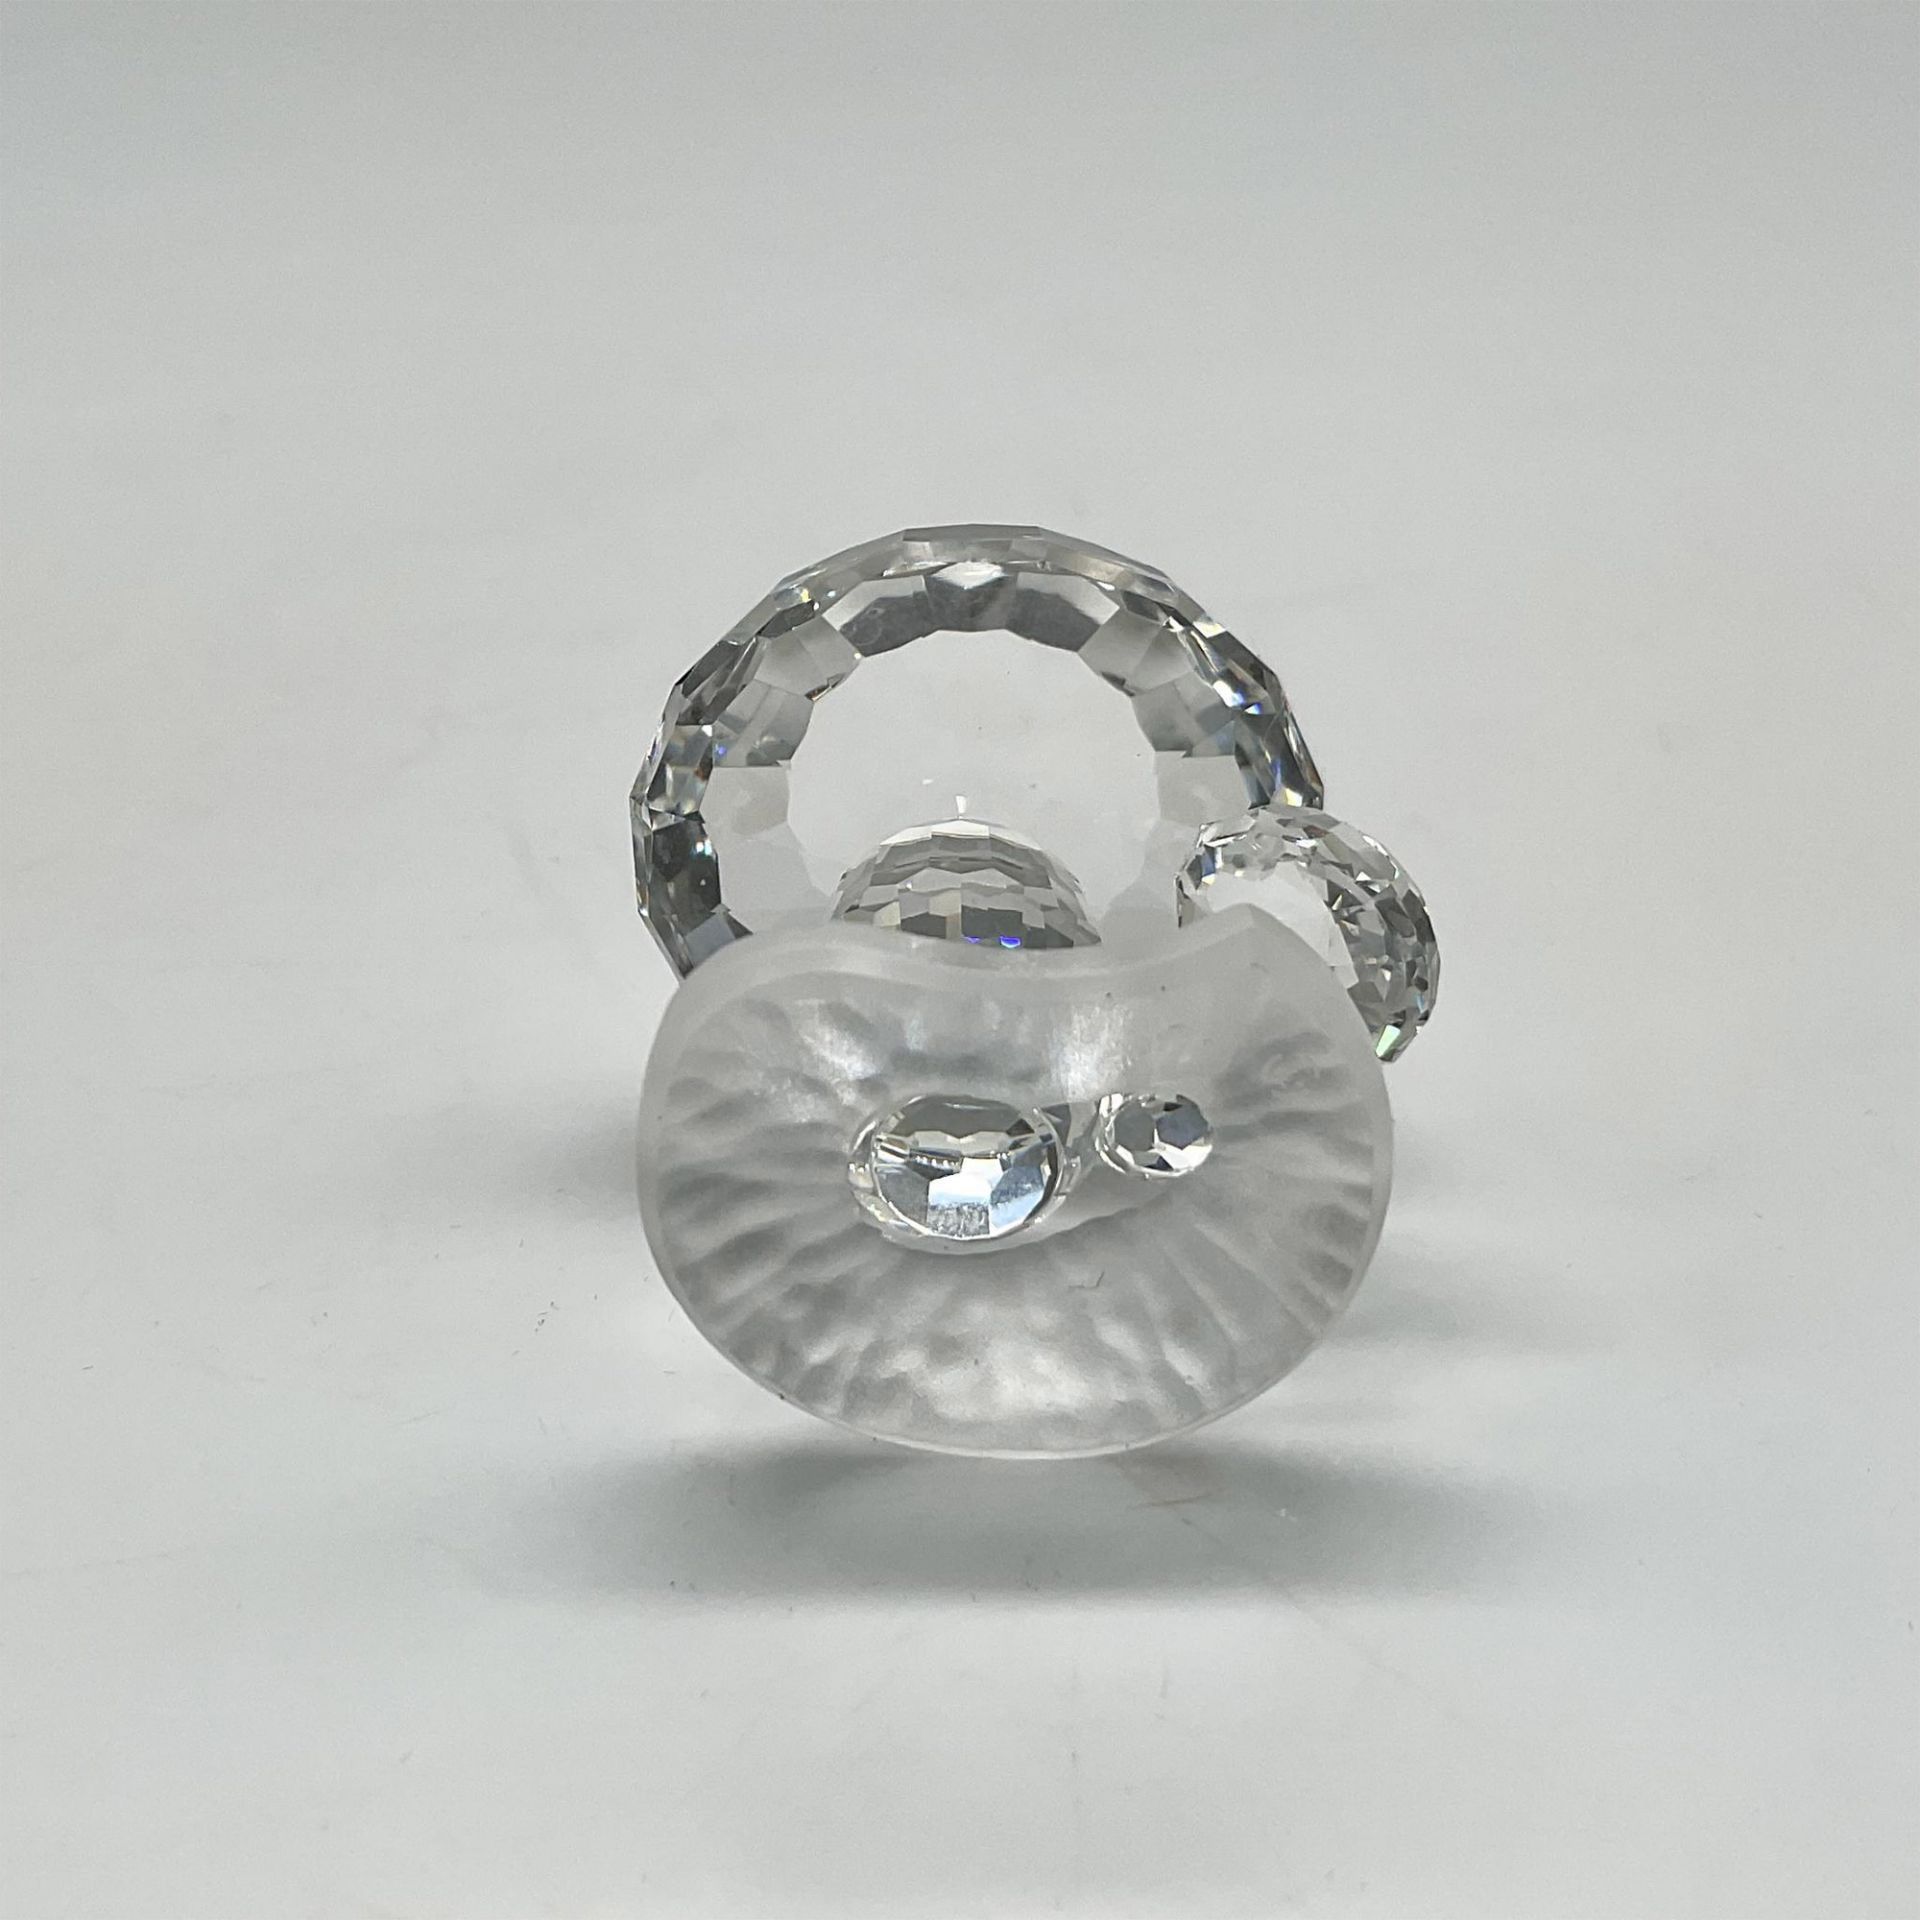 Swarovski Silver Crystal Figurines, Mushrooms - Image 3 of 4